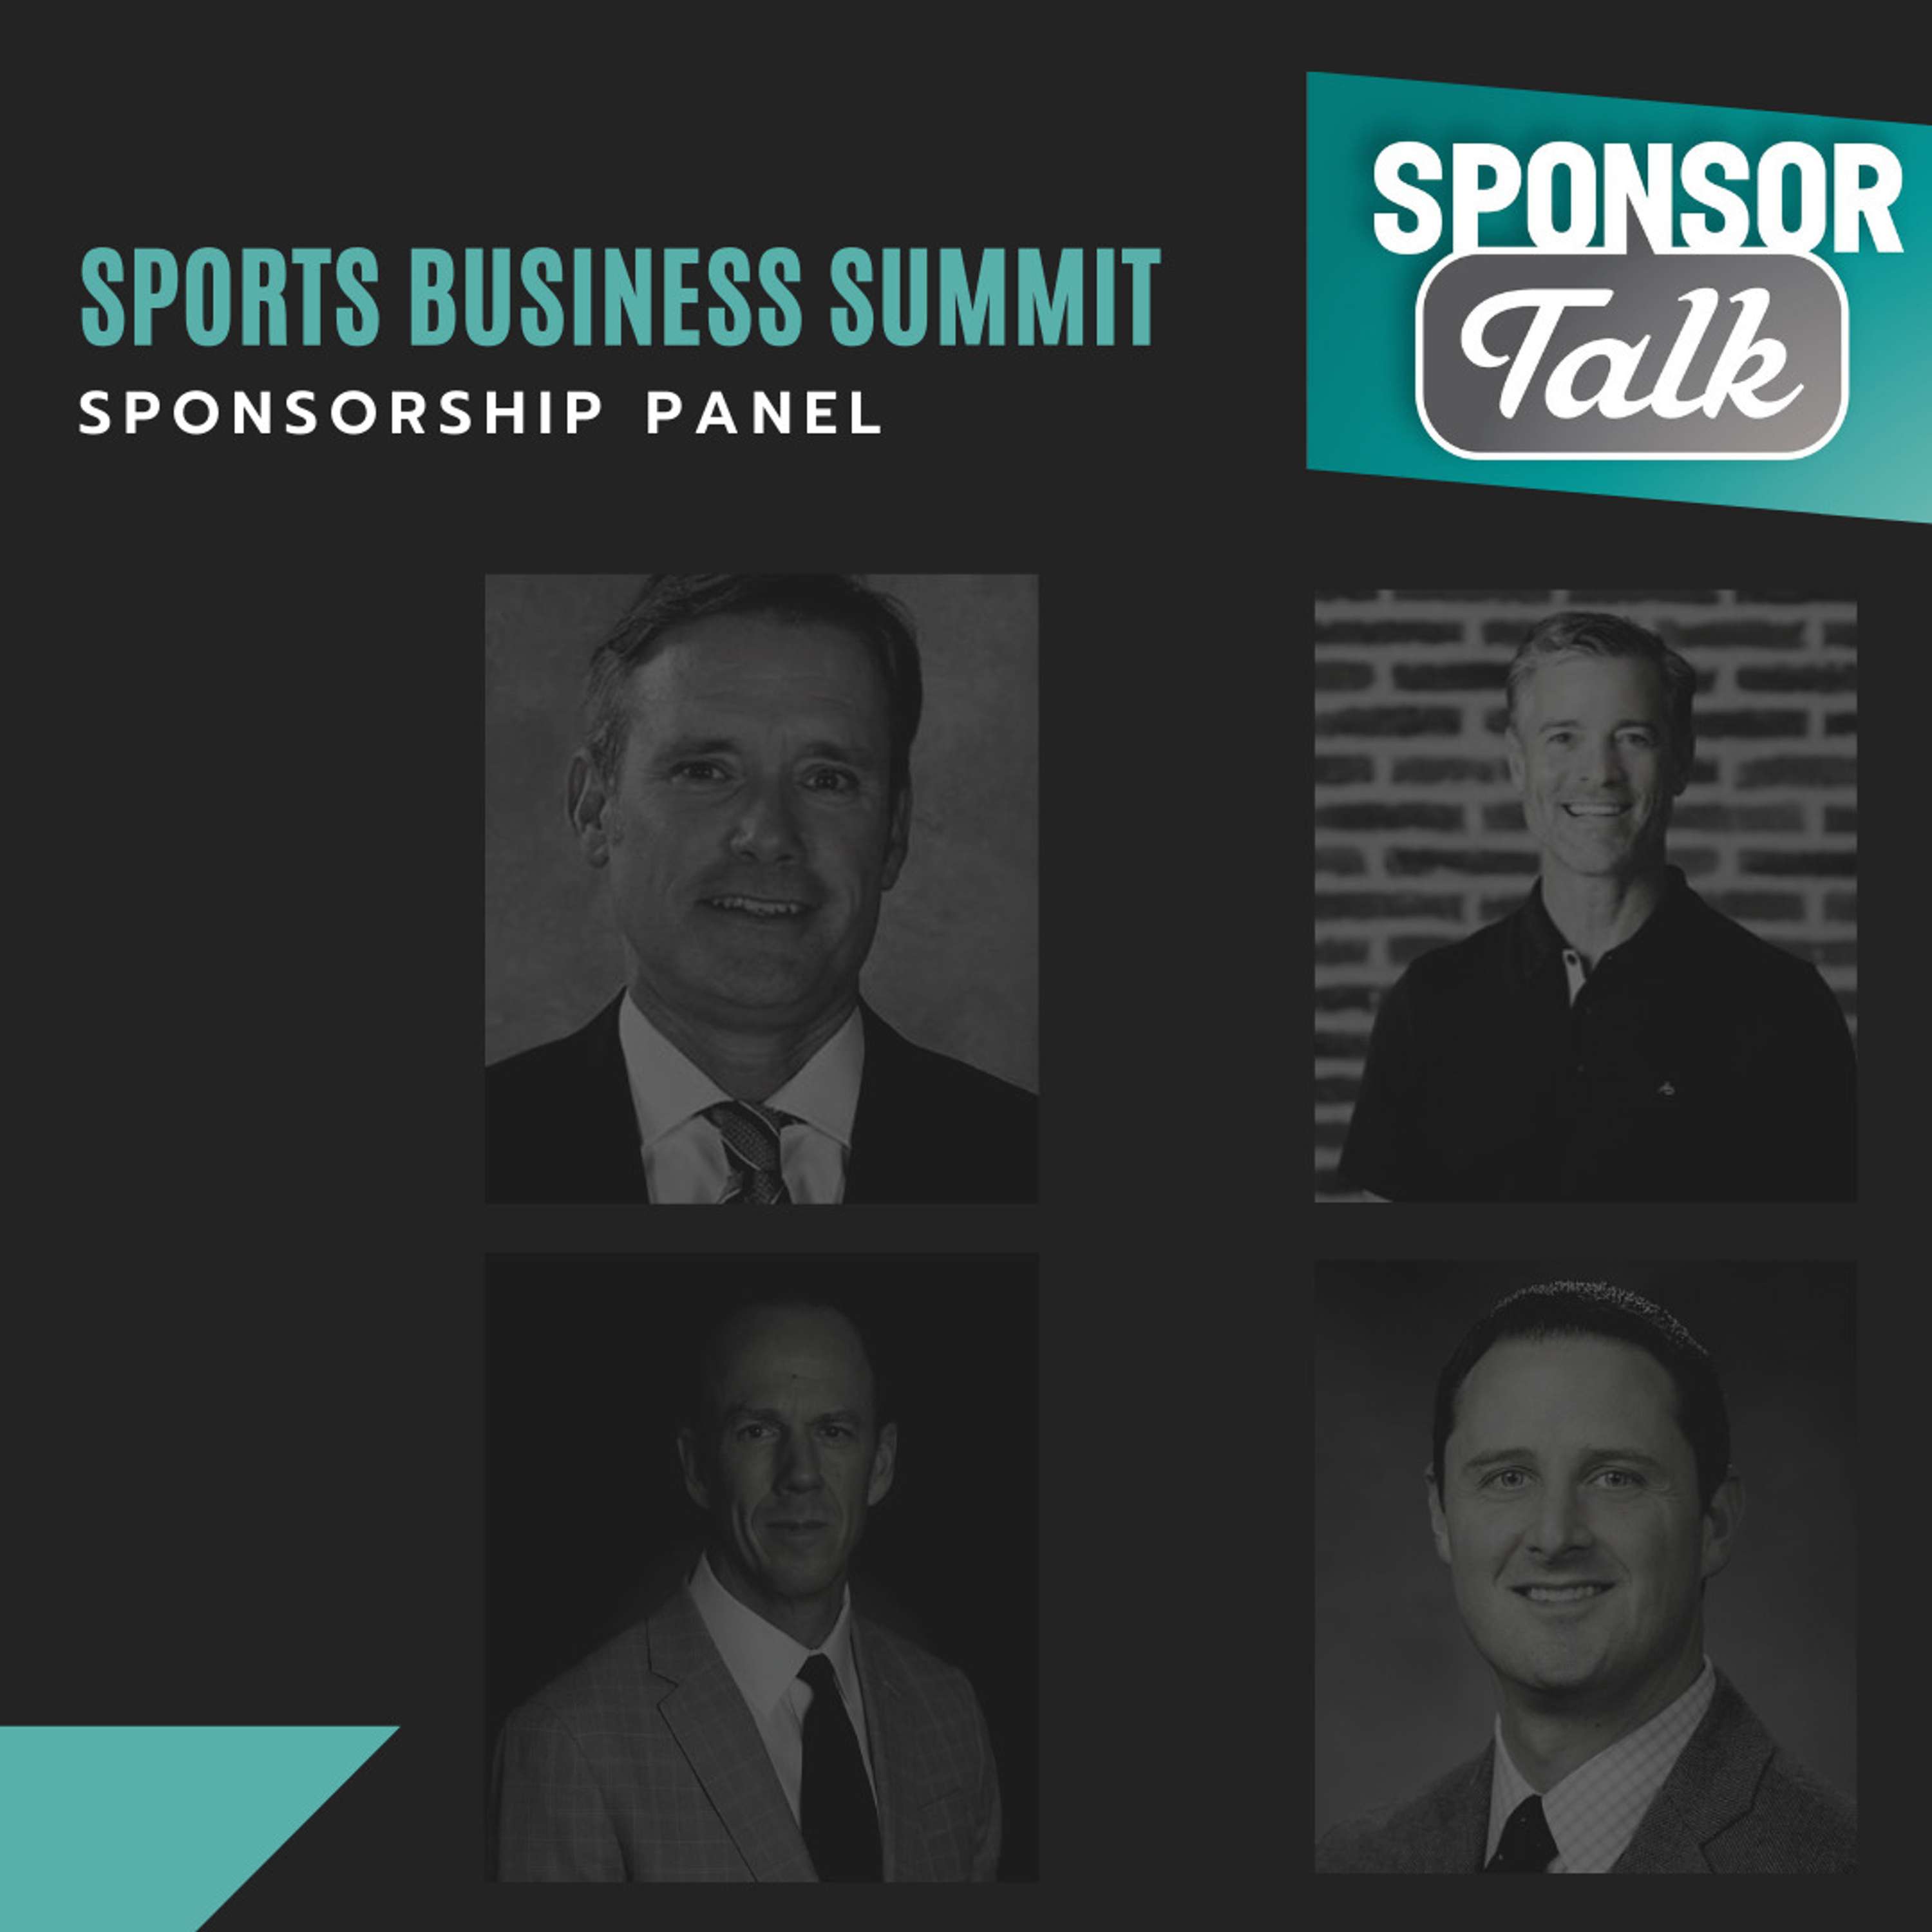 John Kimball, Mike Berry, Greg Tanner, & Casey Stauffer | Sports Business Summit - Sponsorship Panel